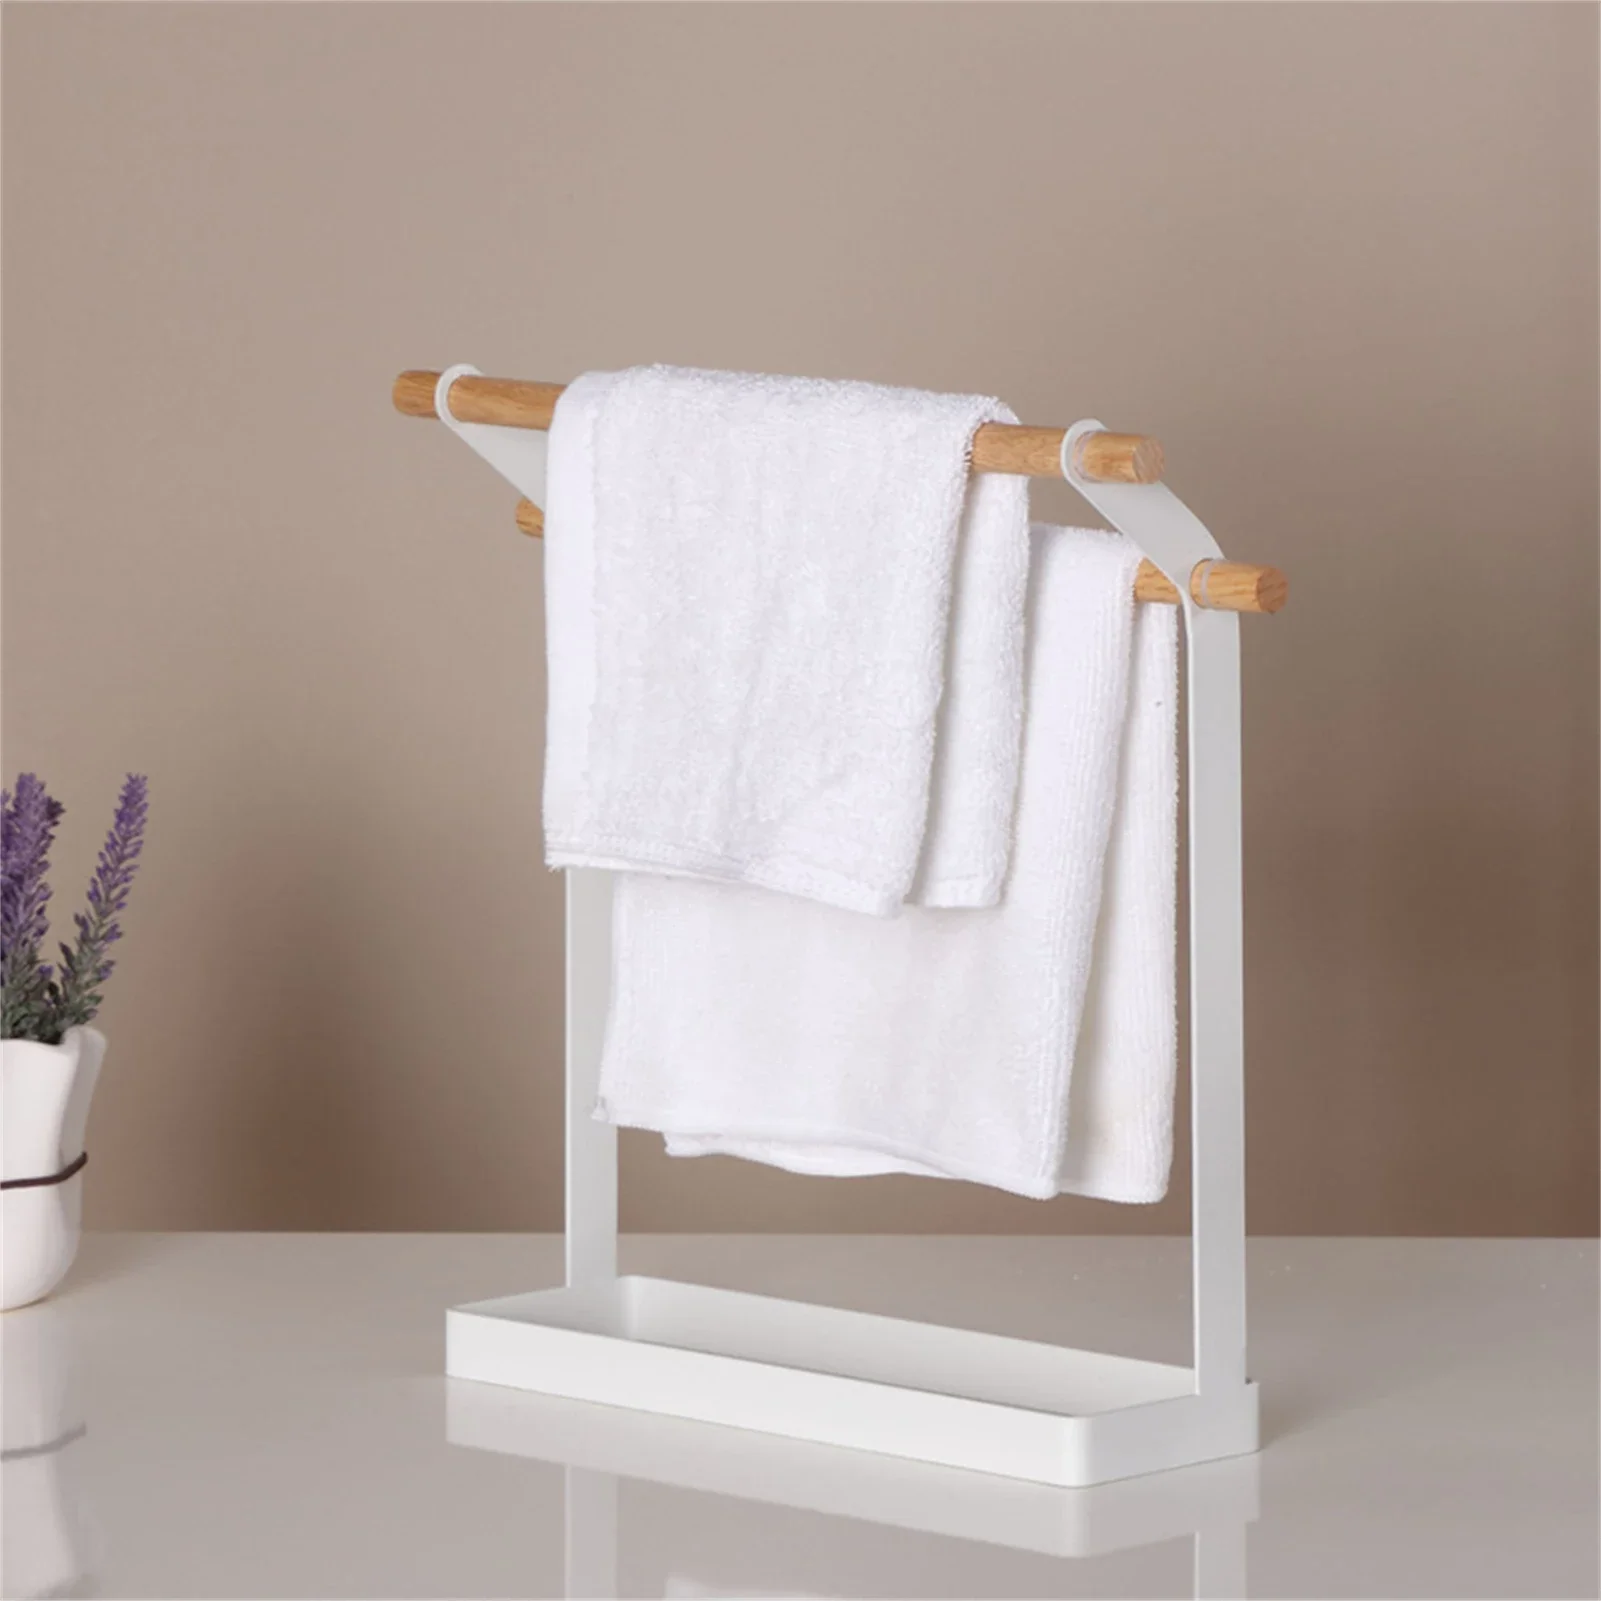 Toallero de pie para baño, 3 barras de metal, organizador de toallas con  estante de almacenamiento, estante de secado de toallas, independiente para